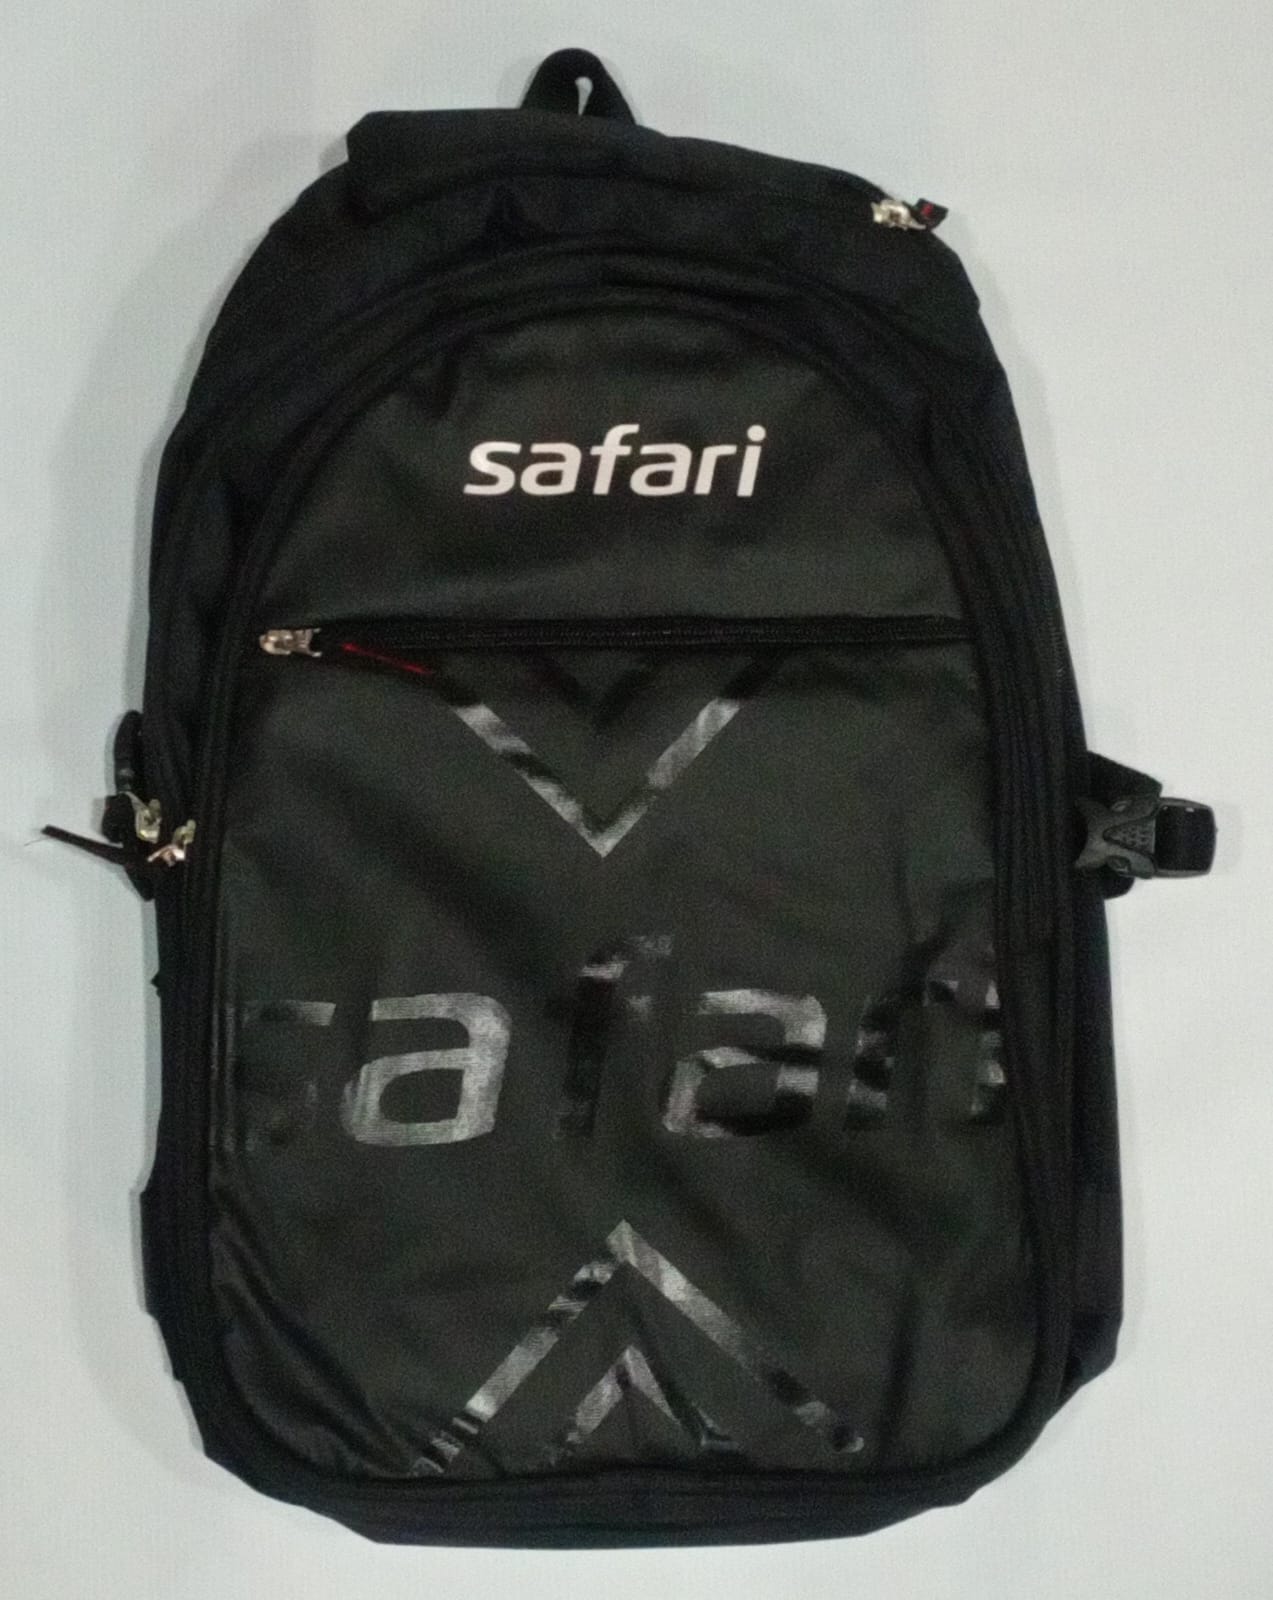 New Safari School Bag for Kids - F Store - Online store for school ...